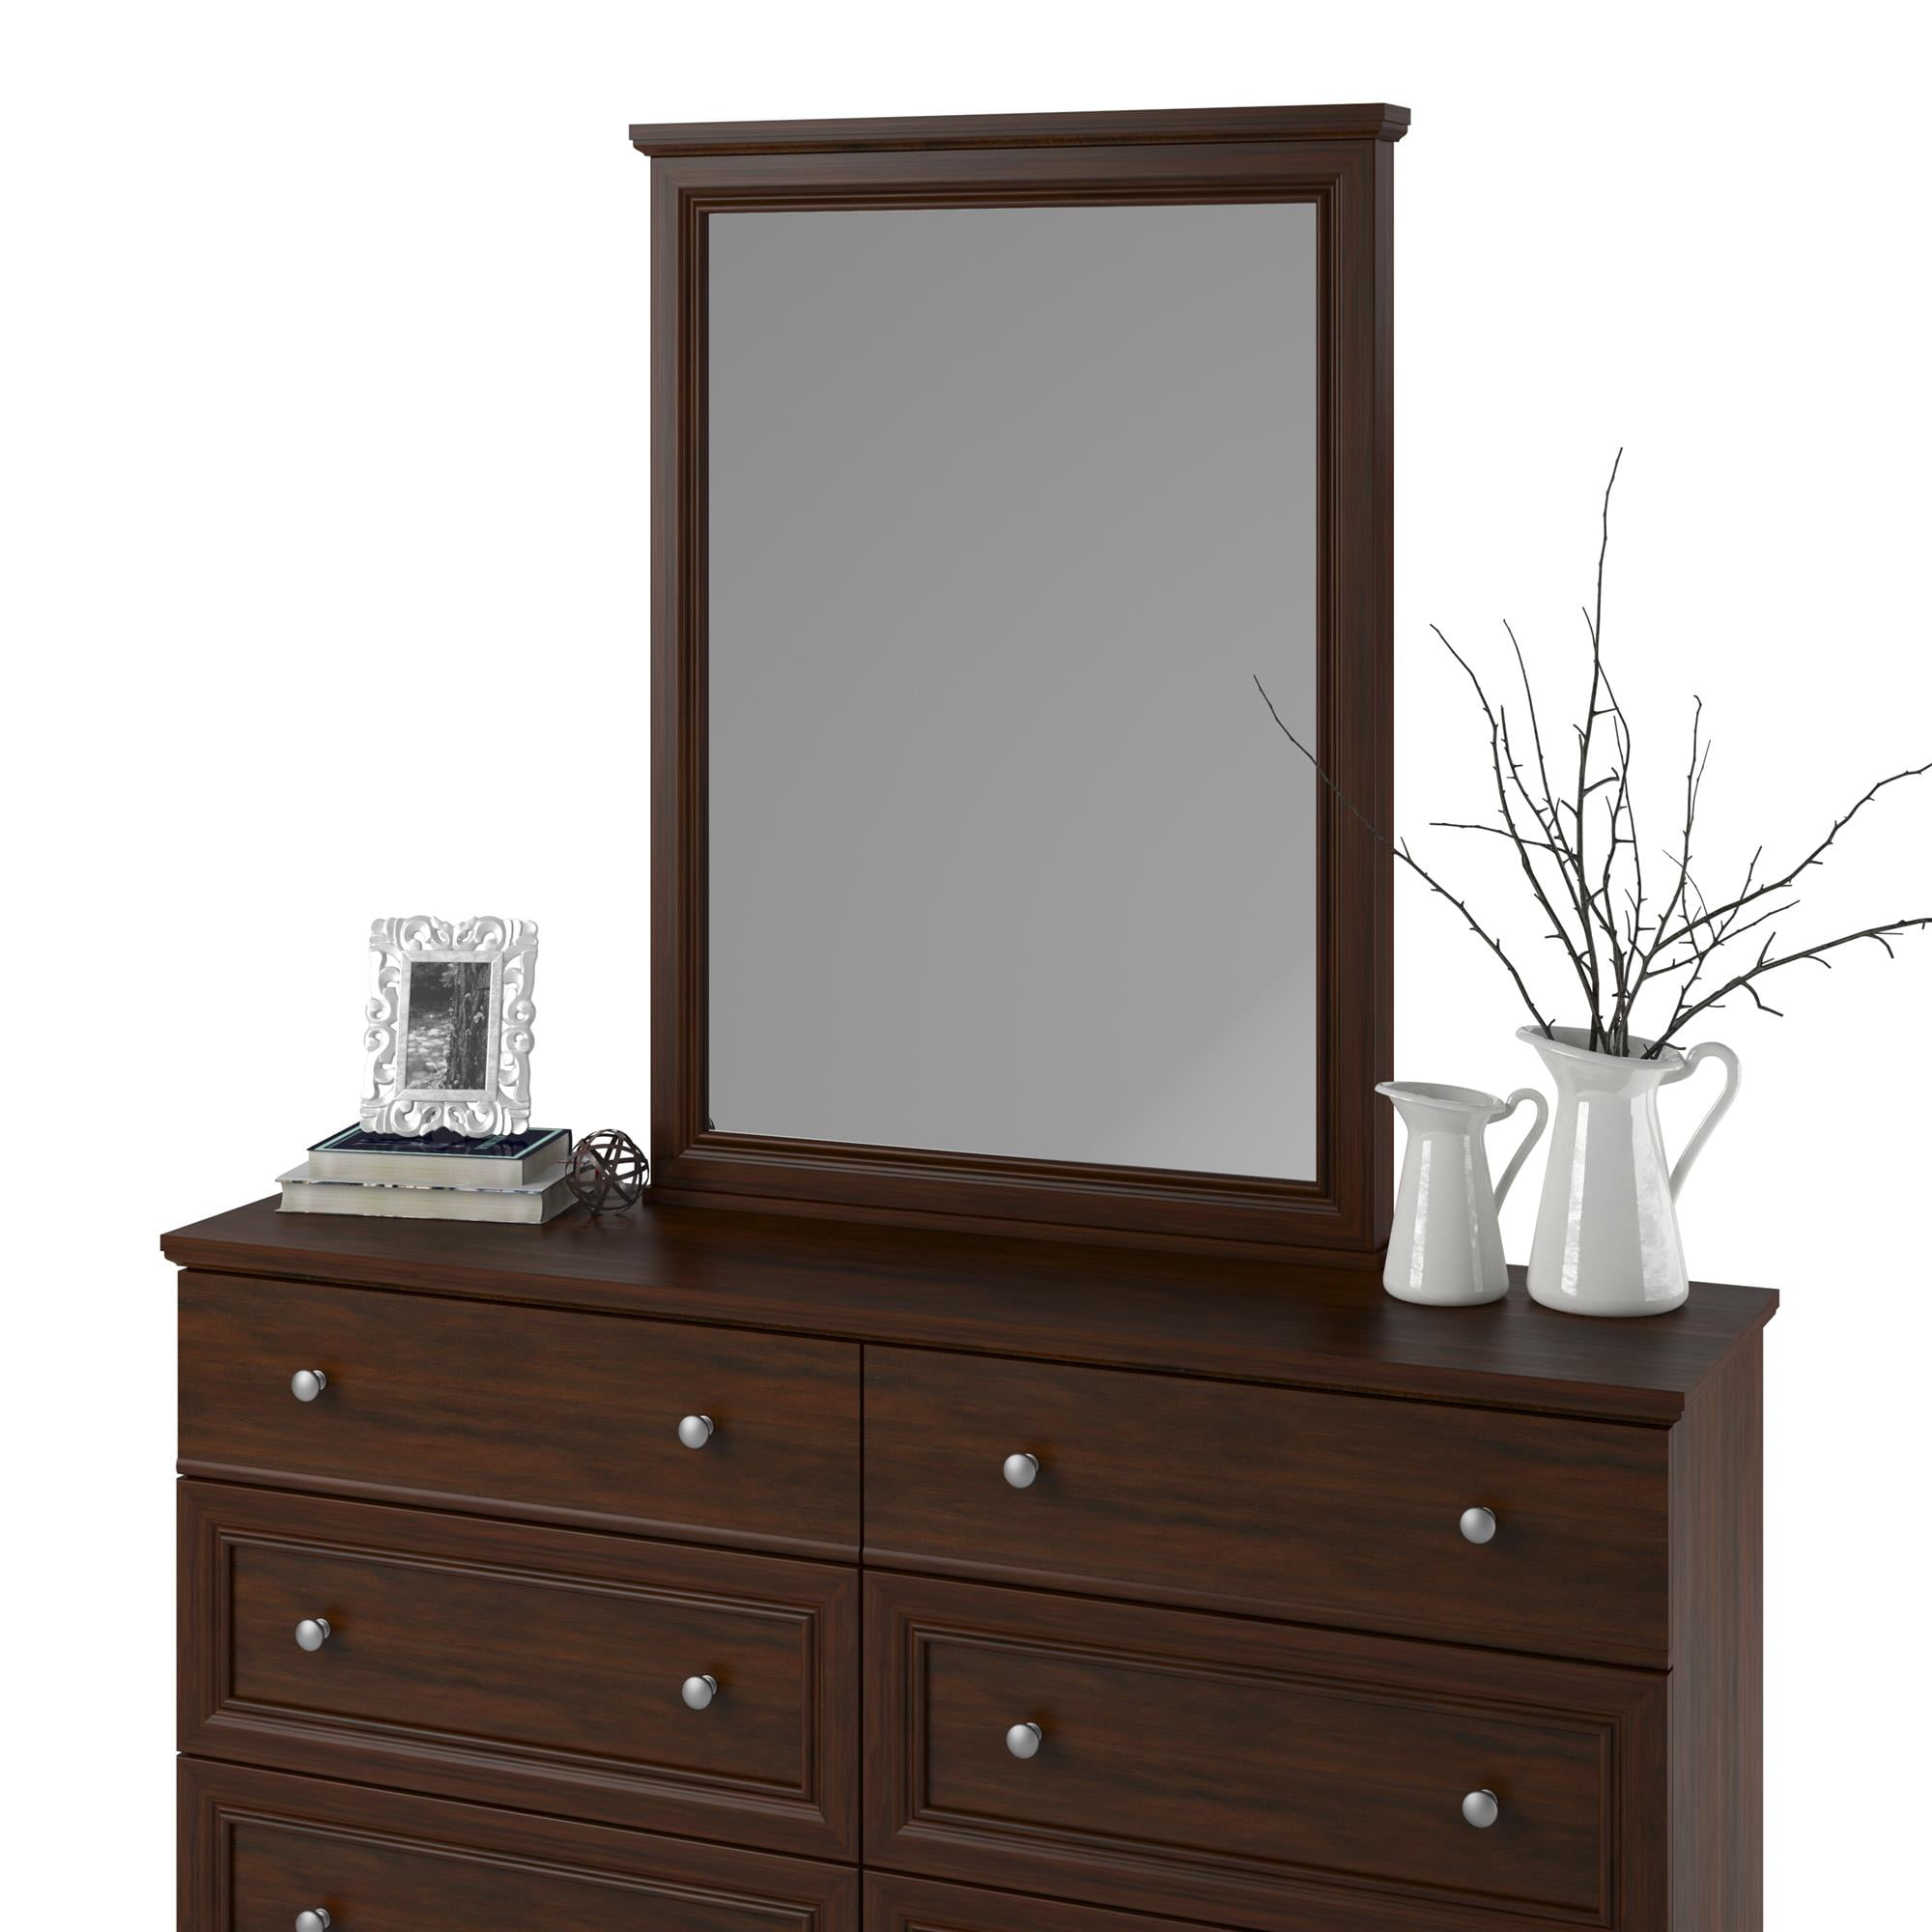 Ameriwood Home Hanover Creek Dresser Mirror MIRROR ONLY